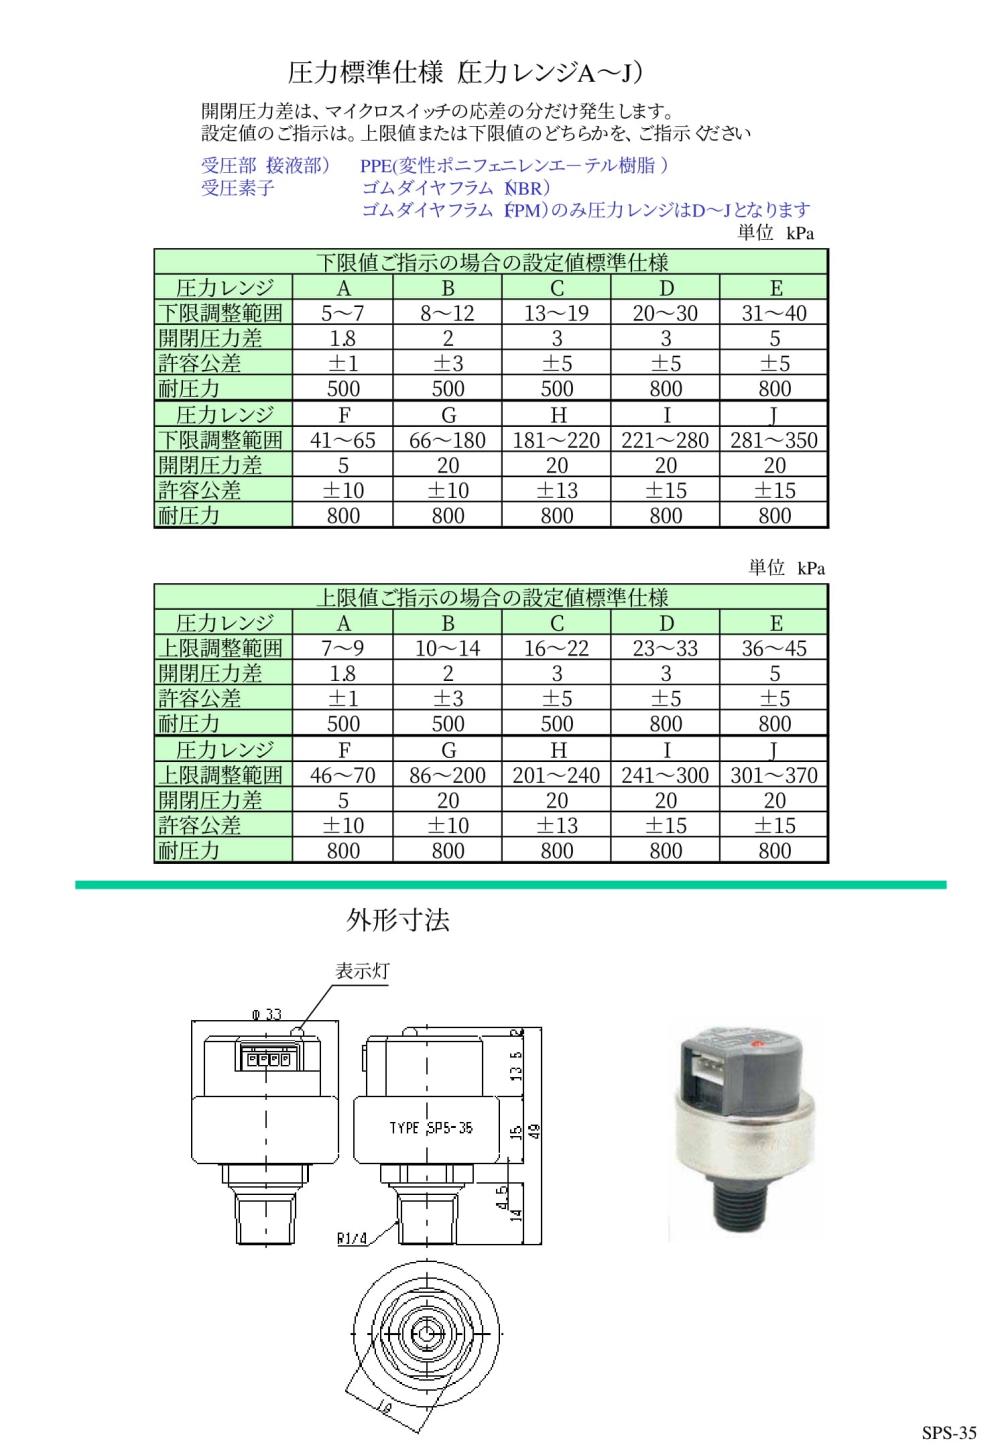 SANWA DENKI Pressure Switch SPS-35, PPE, Drip-Proof Series